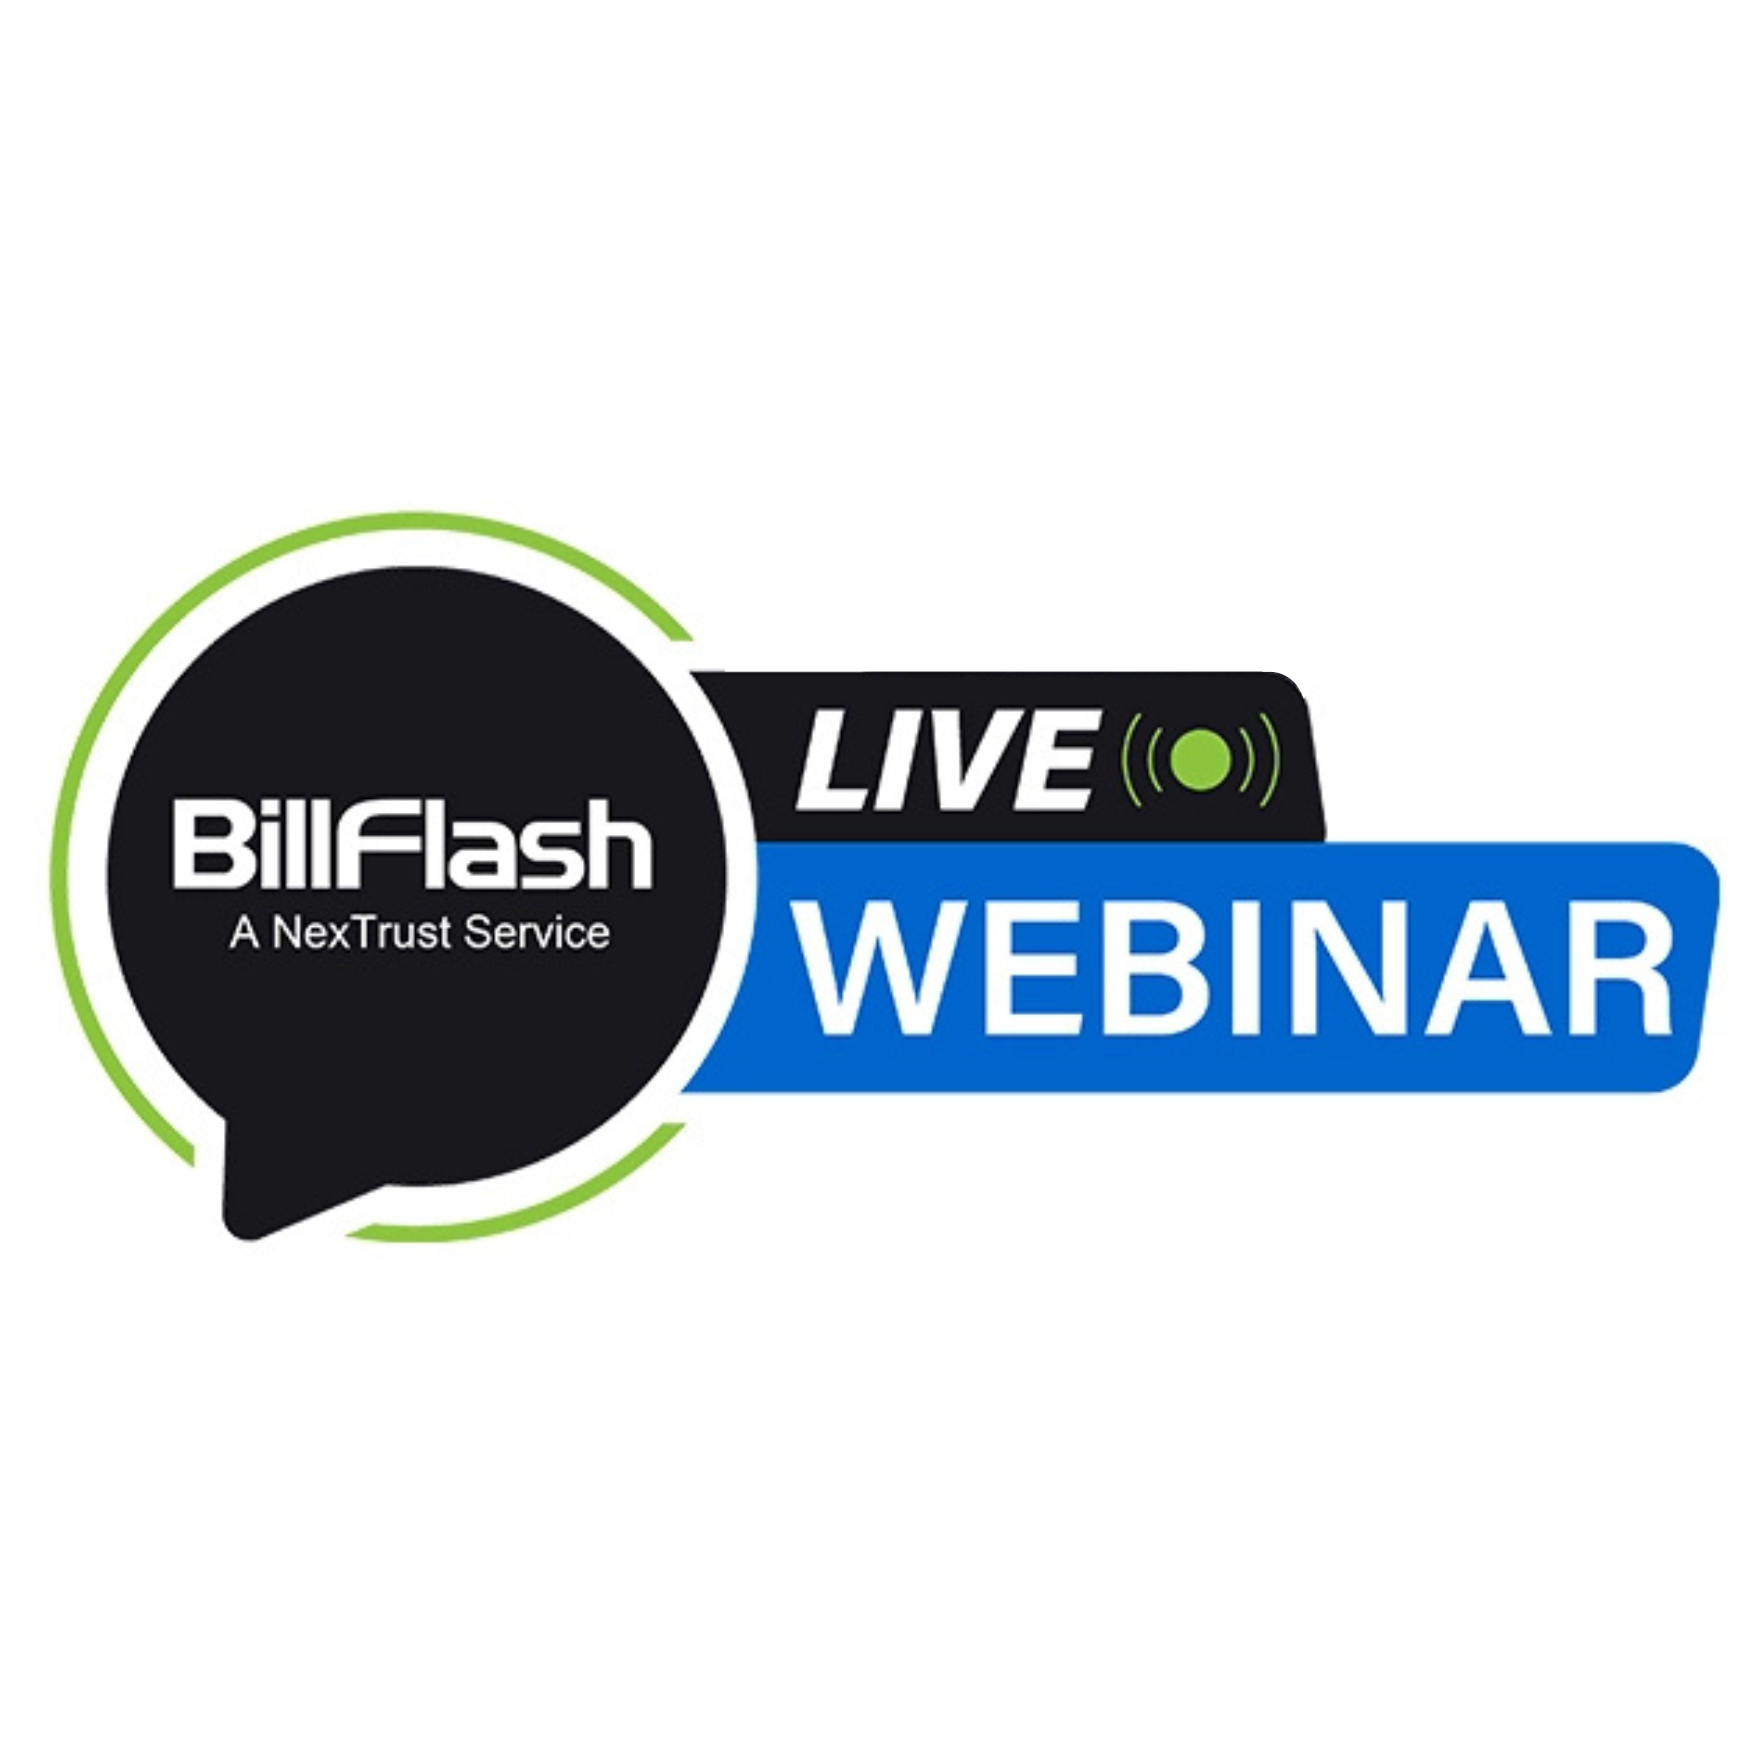 BillFlash Live Webinar